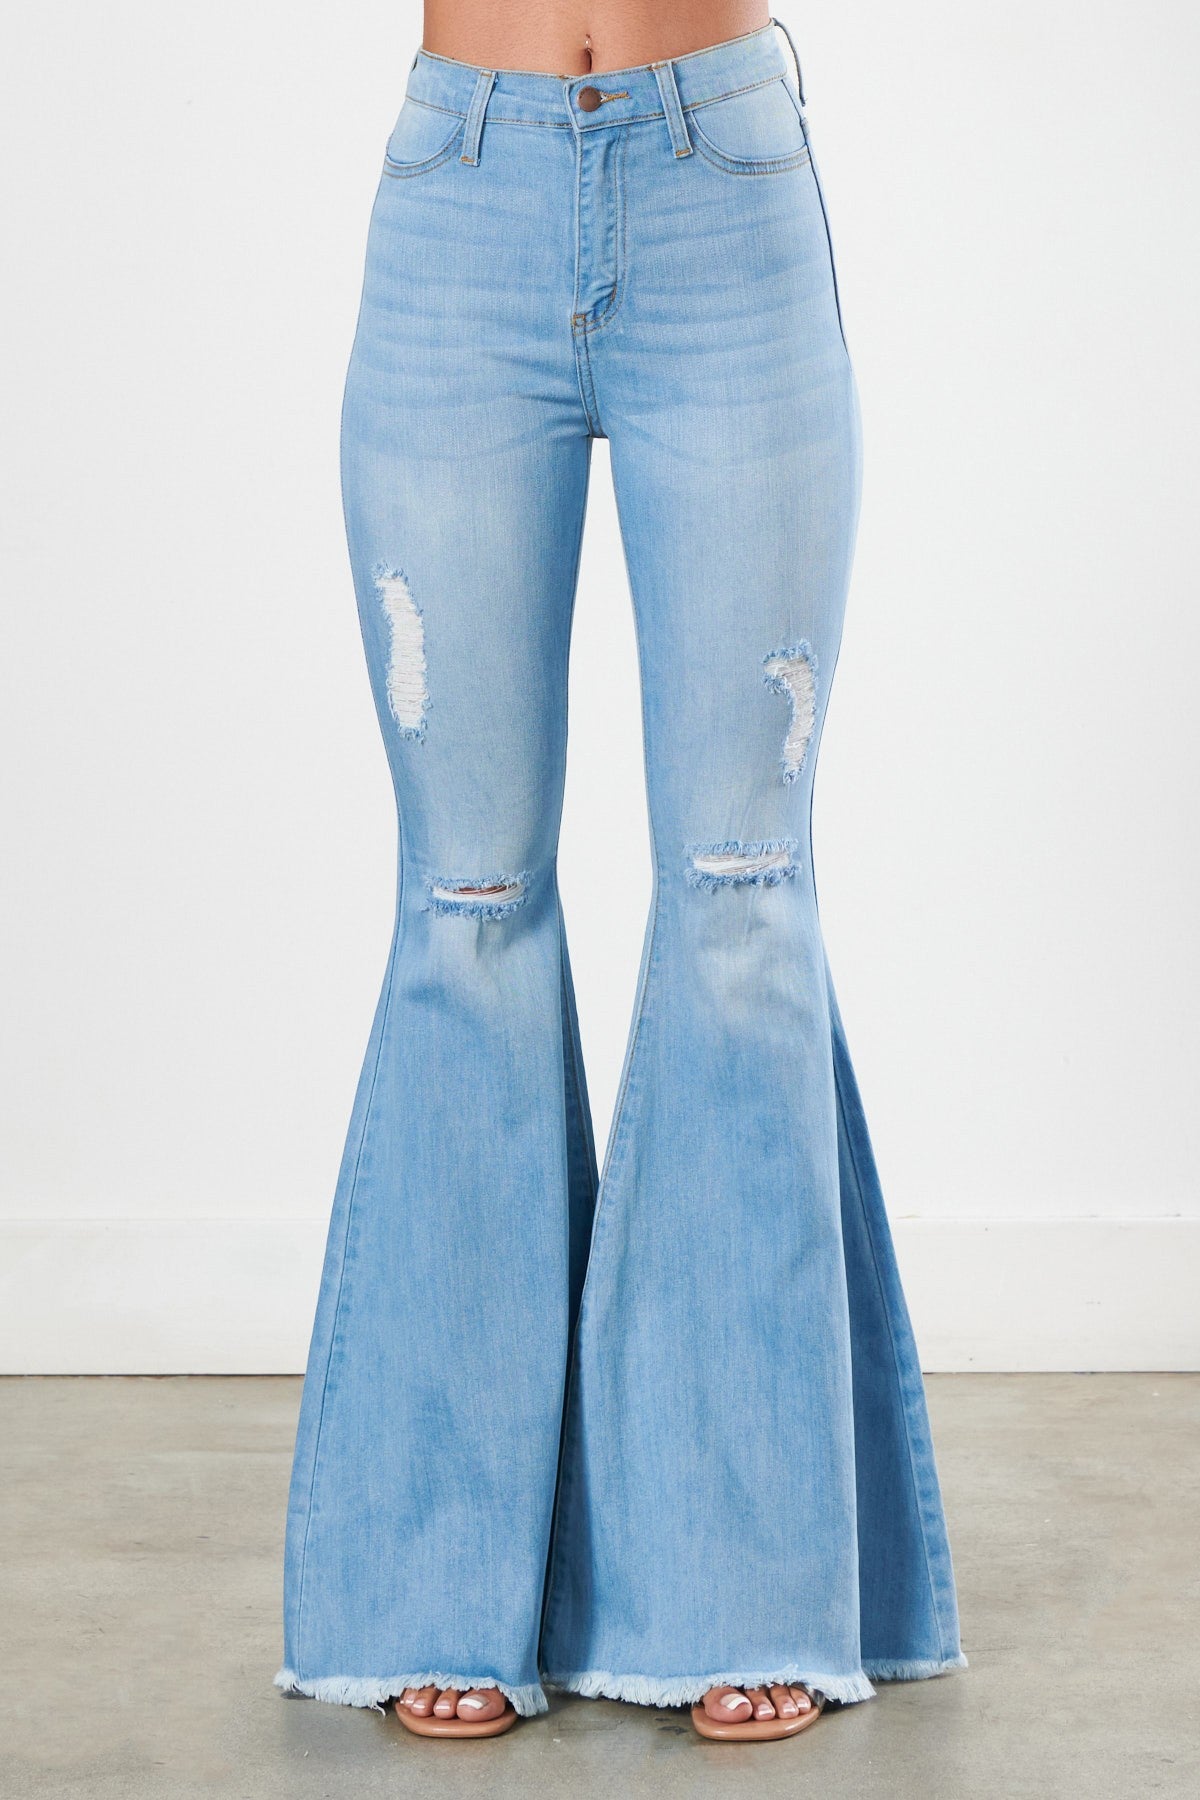 https://cdn.shopify.com/s/files/1/1240/1100/products/vibrant-miu-light-wash-distressed-flare-jeans.jpg?v=1646240776